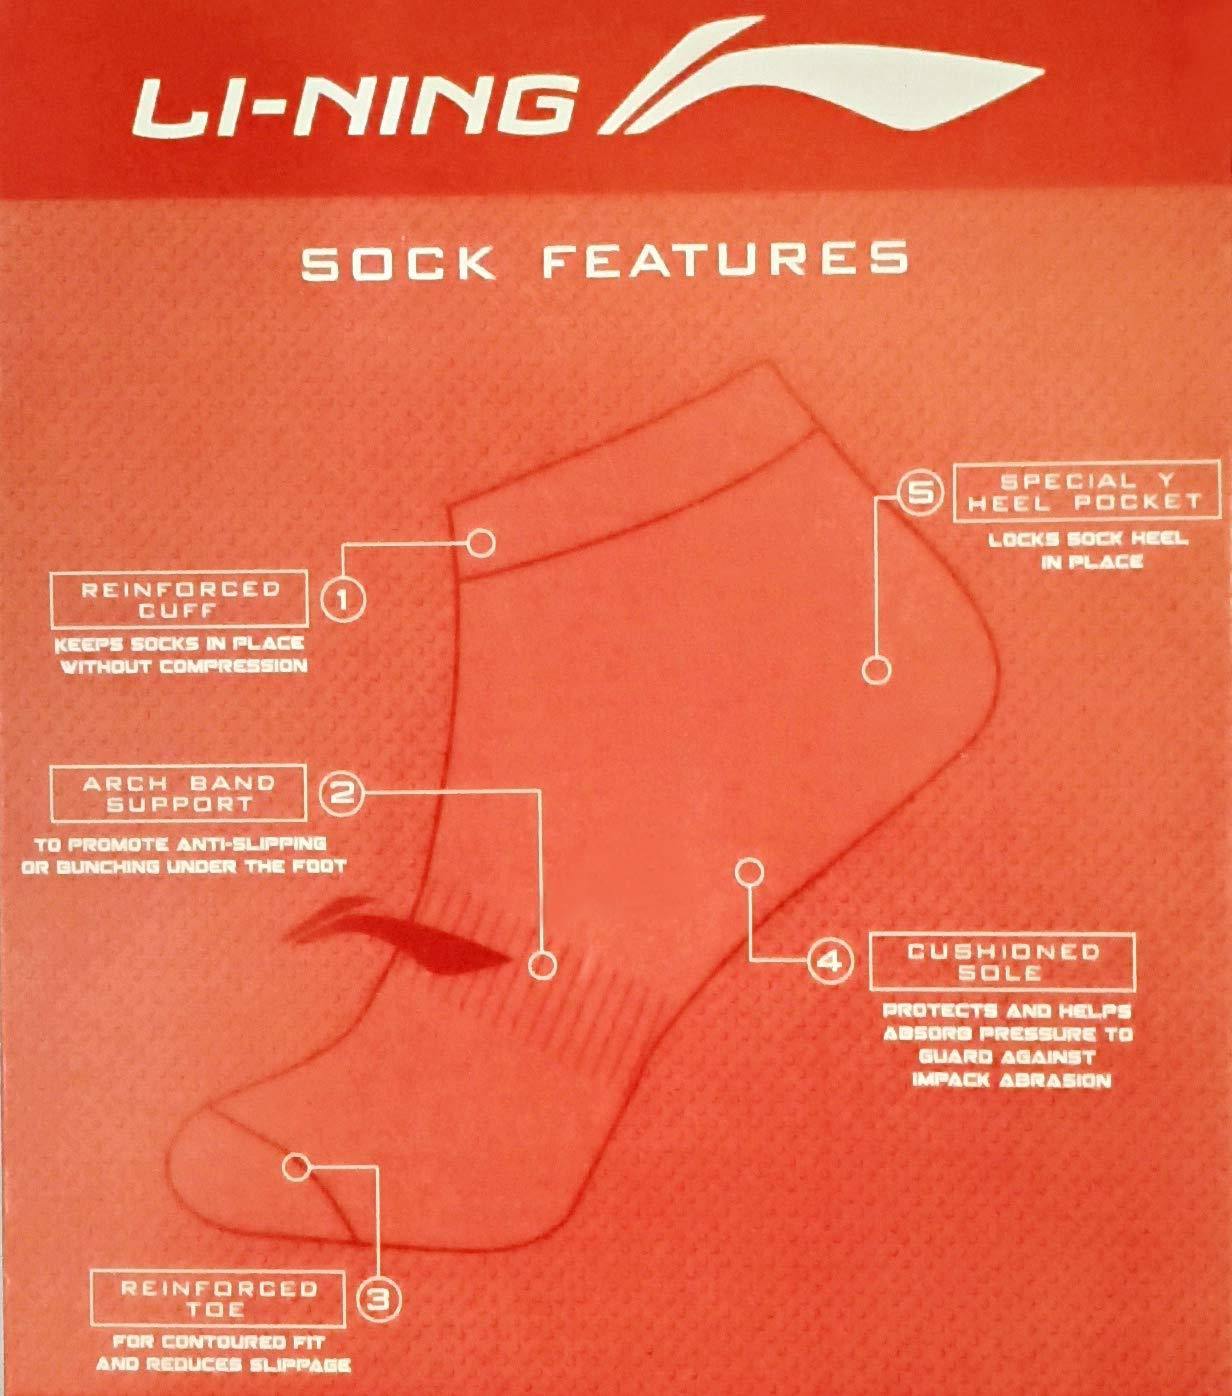 Li-Ning Cotton Men's Sports Socks, Ankle length, Pack of 3, White - Best Price online Prokicksports.com